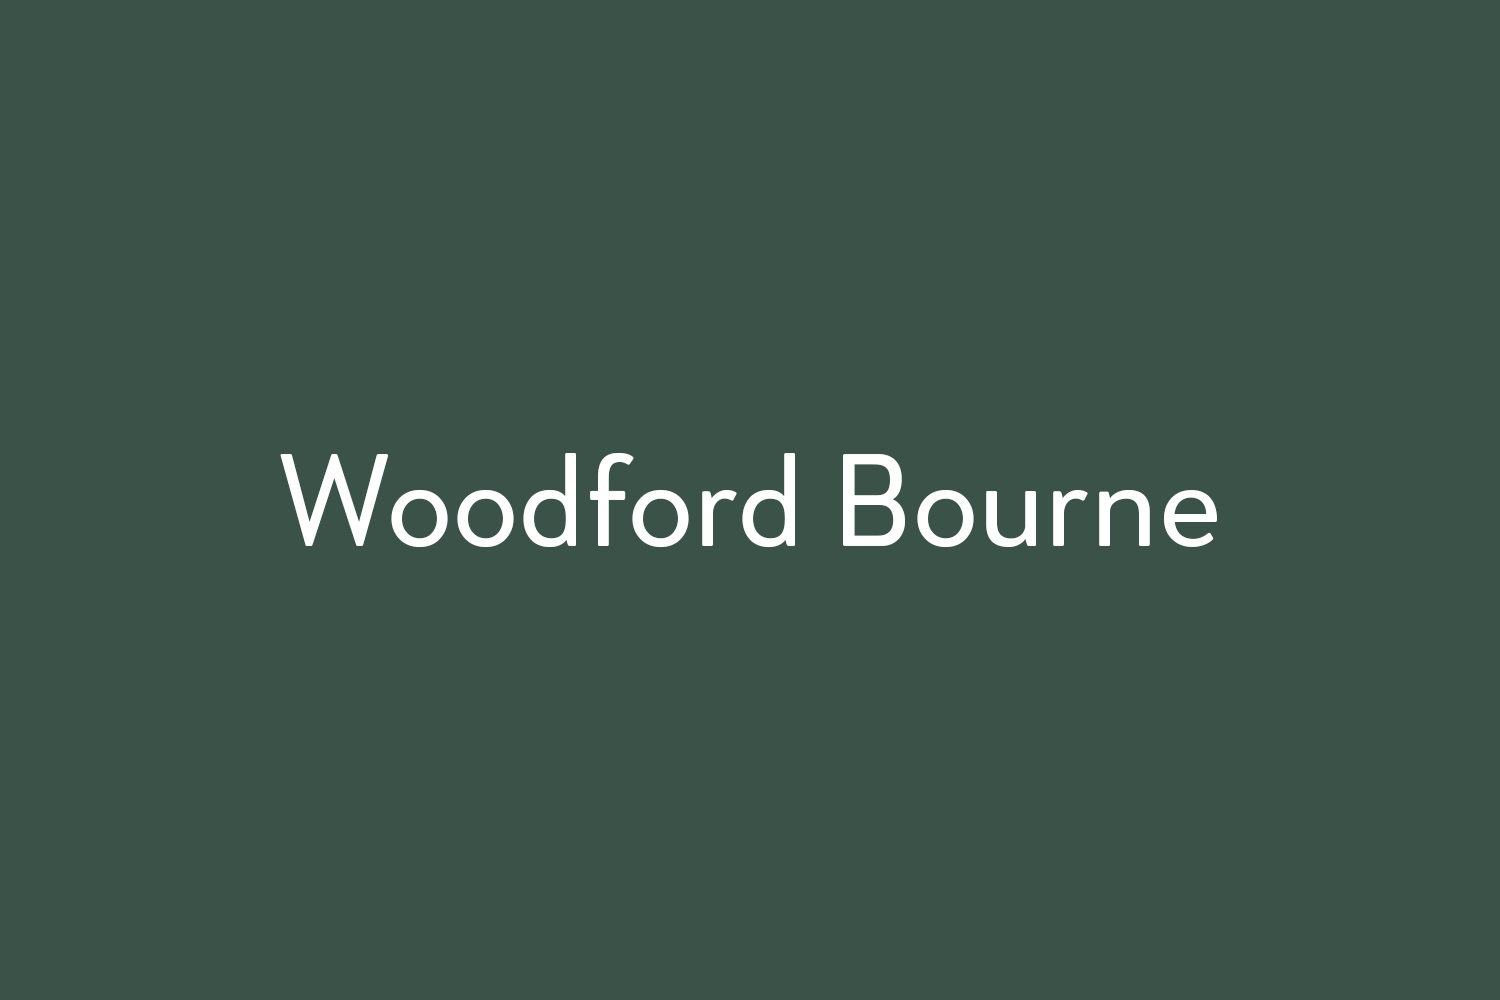 Woodford Bourne